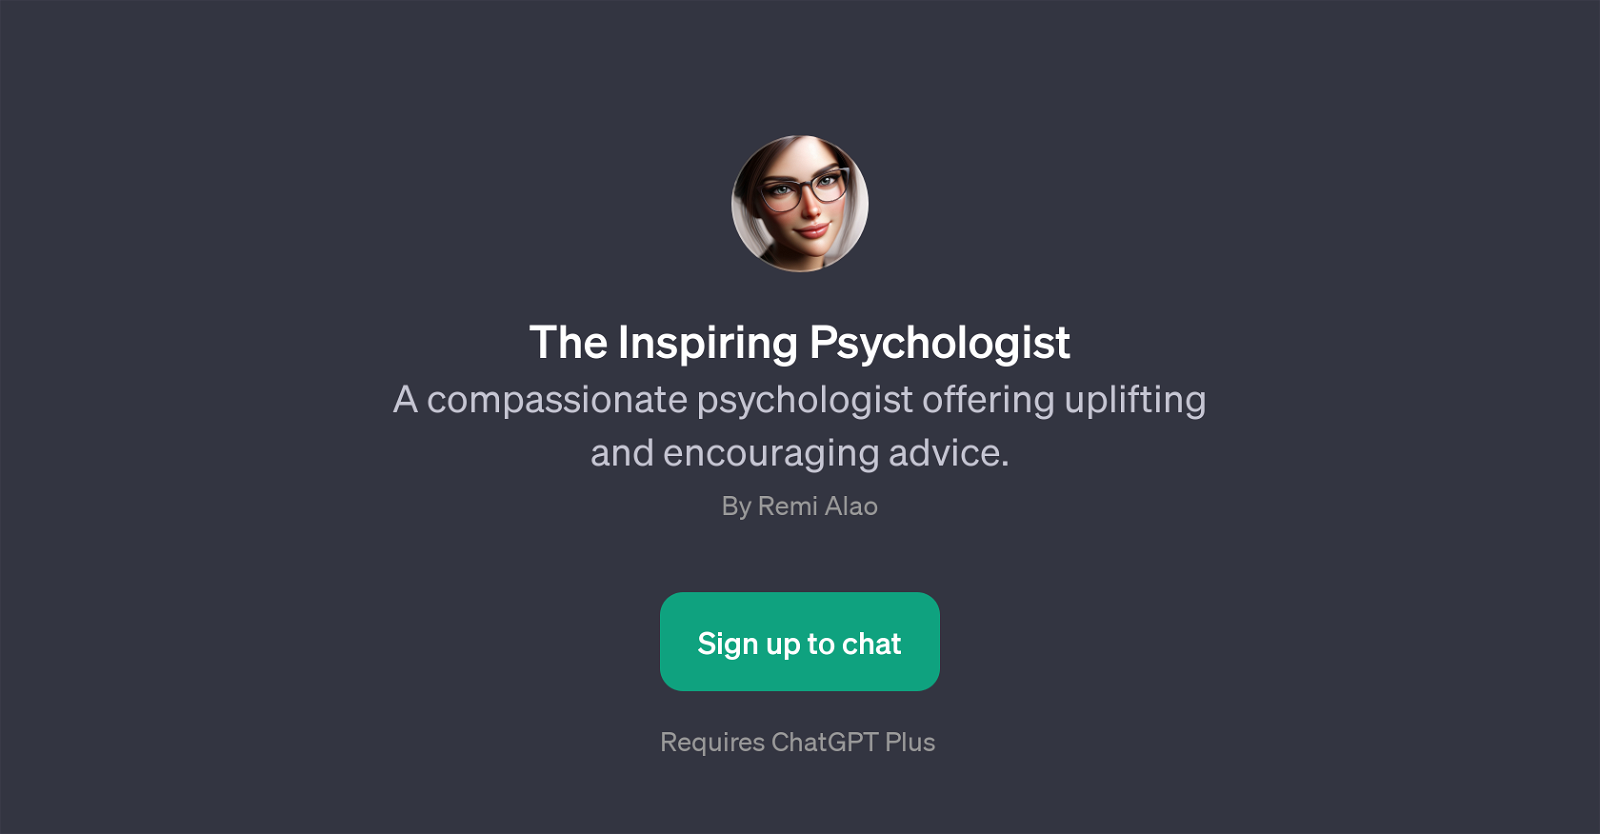 The Inspiring Psychologist website